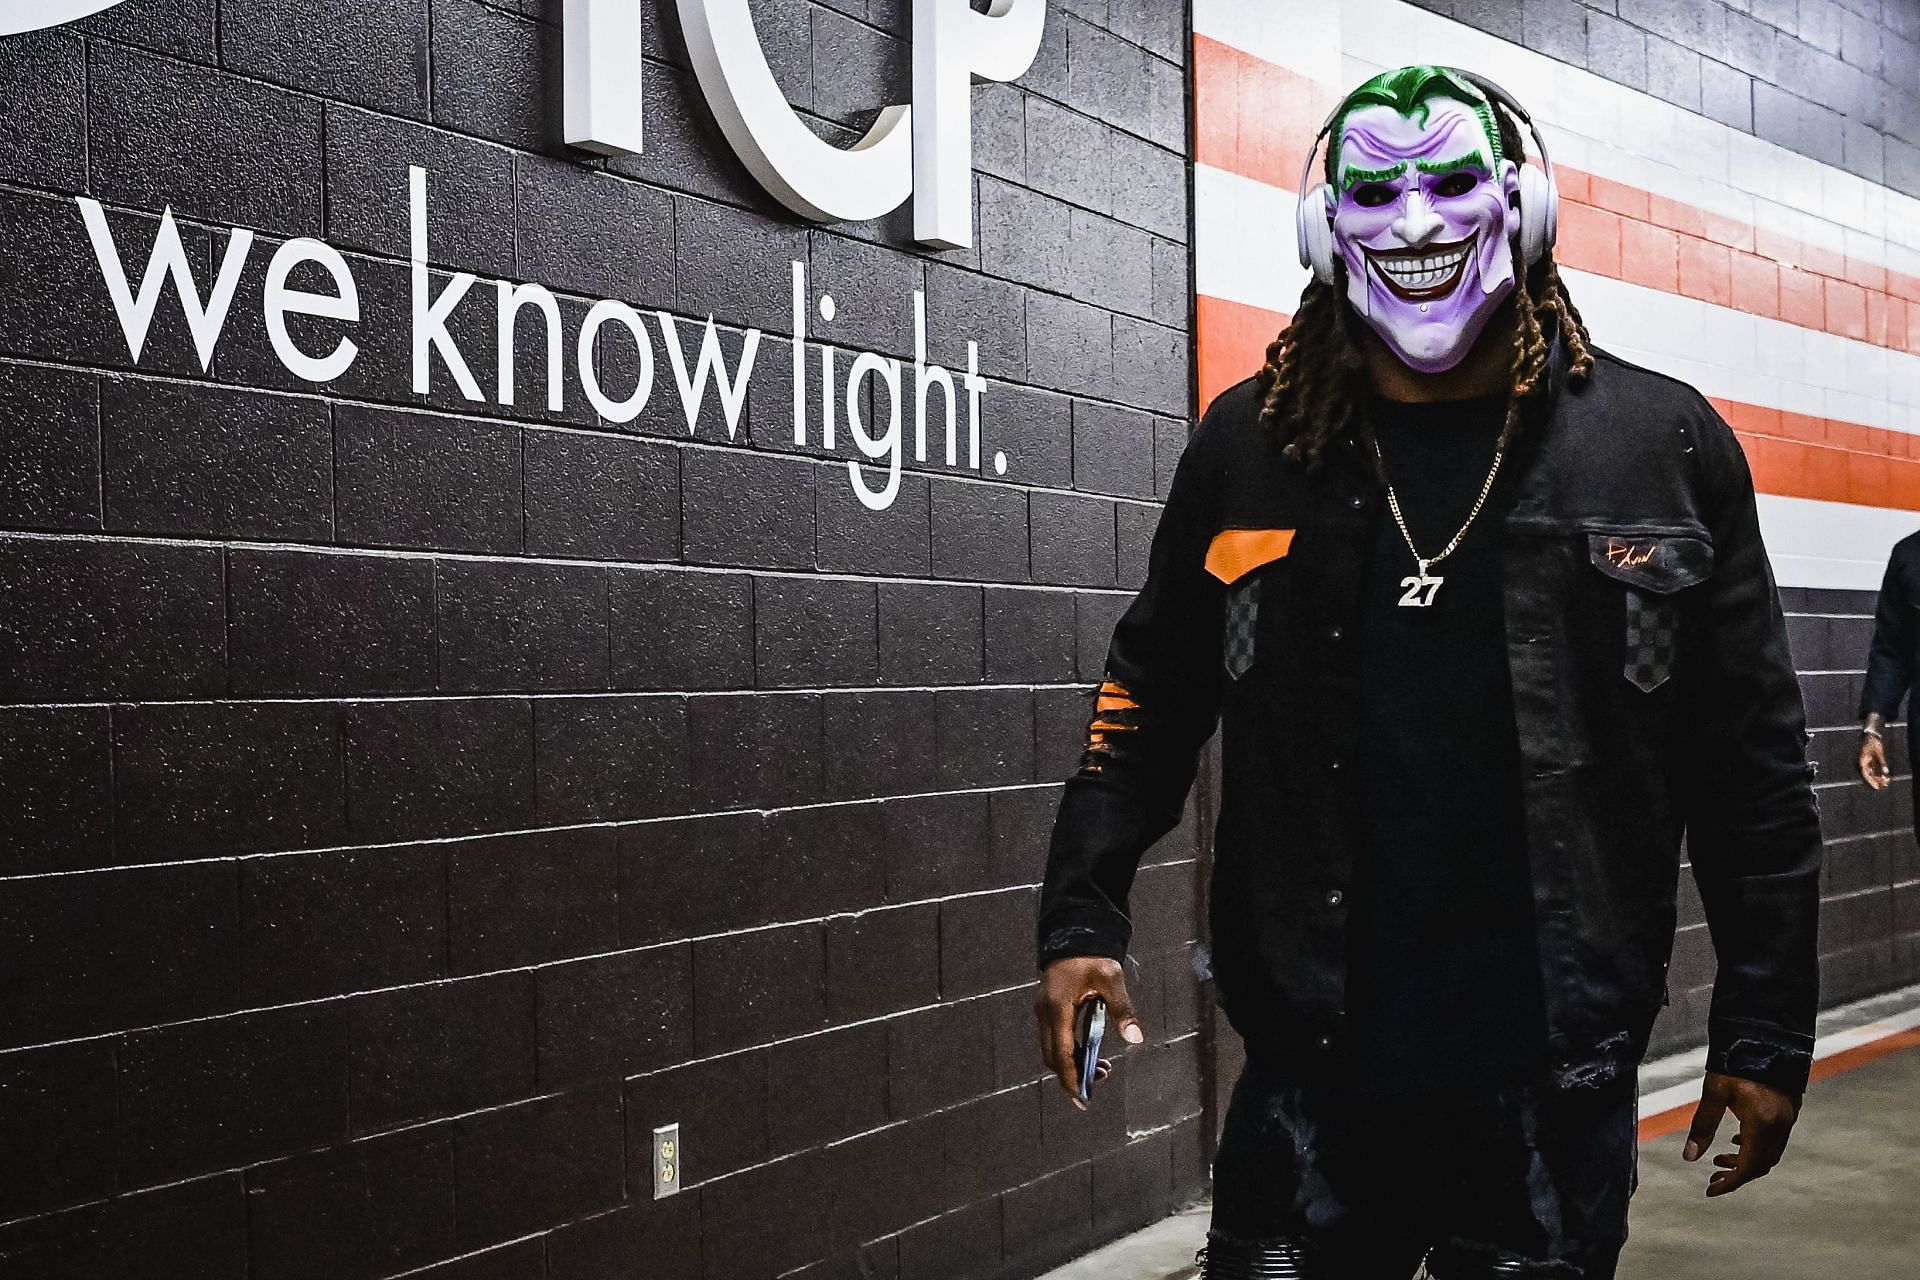 Hunt arriving as The Joker. Photo via Cleveland Browns Twitter.